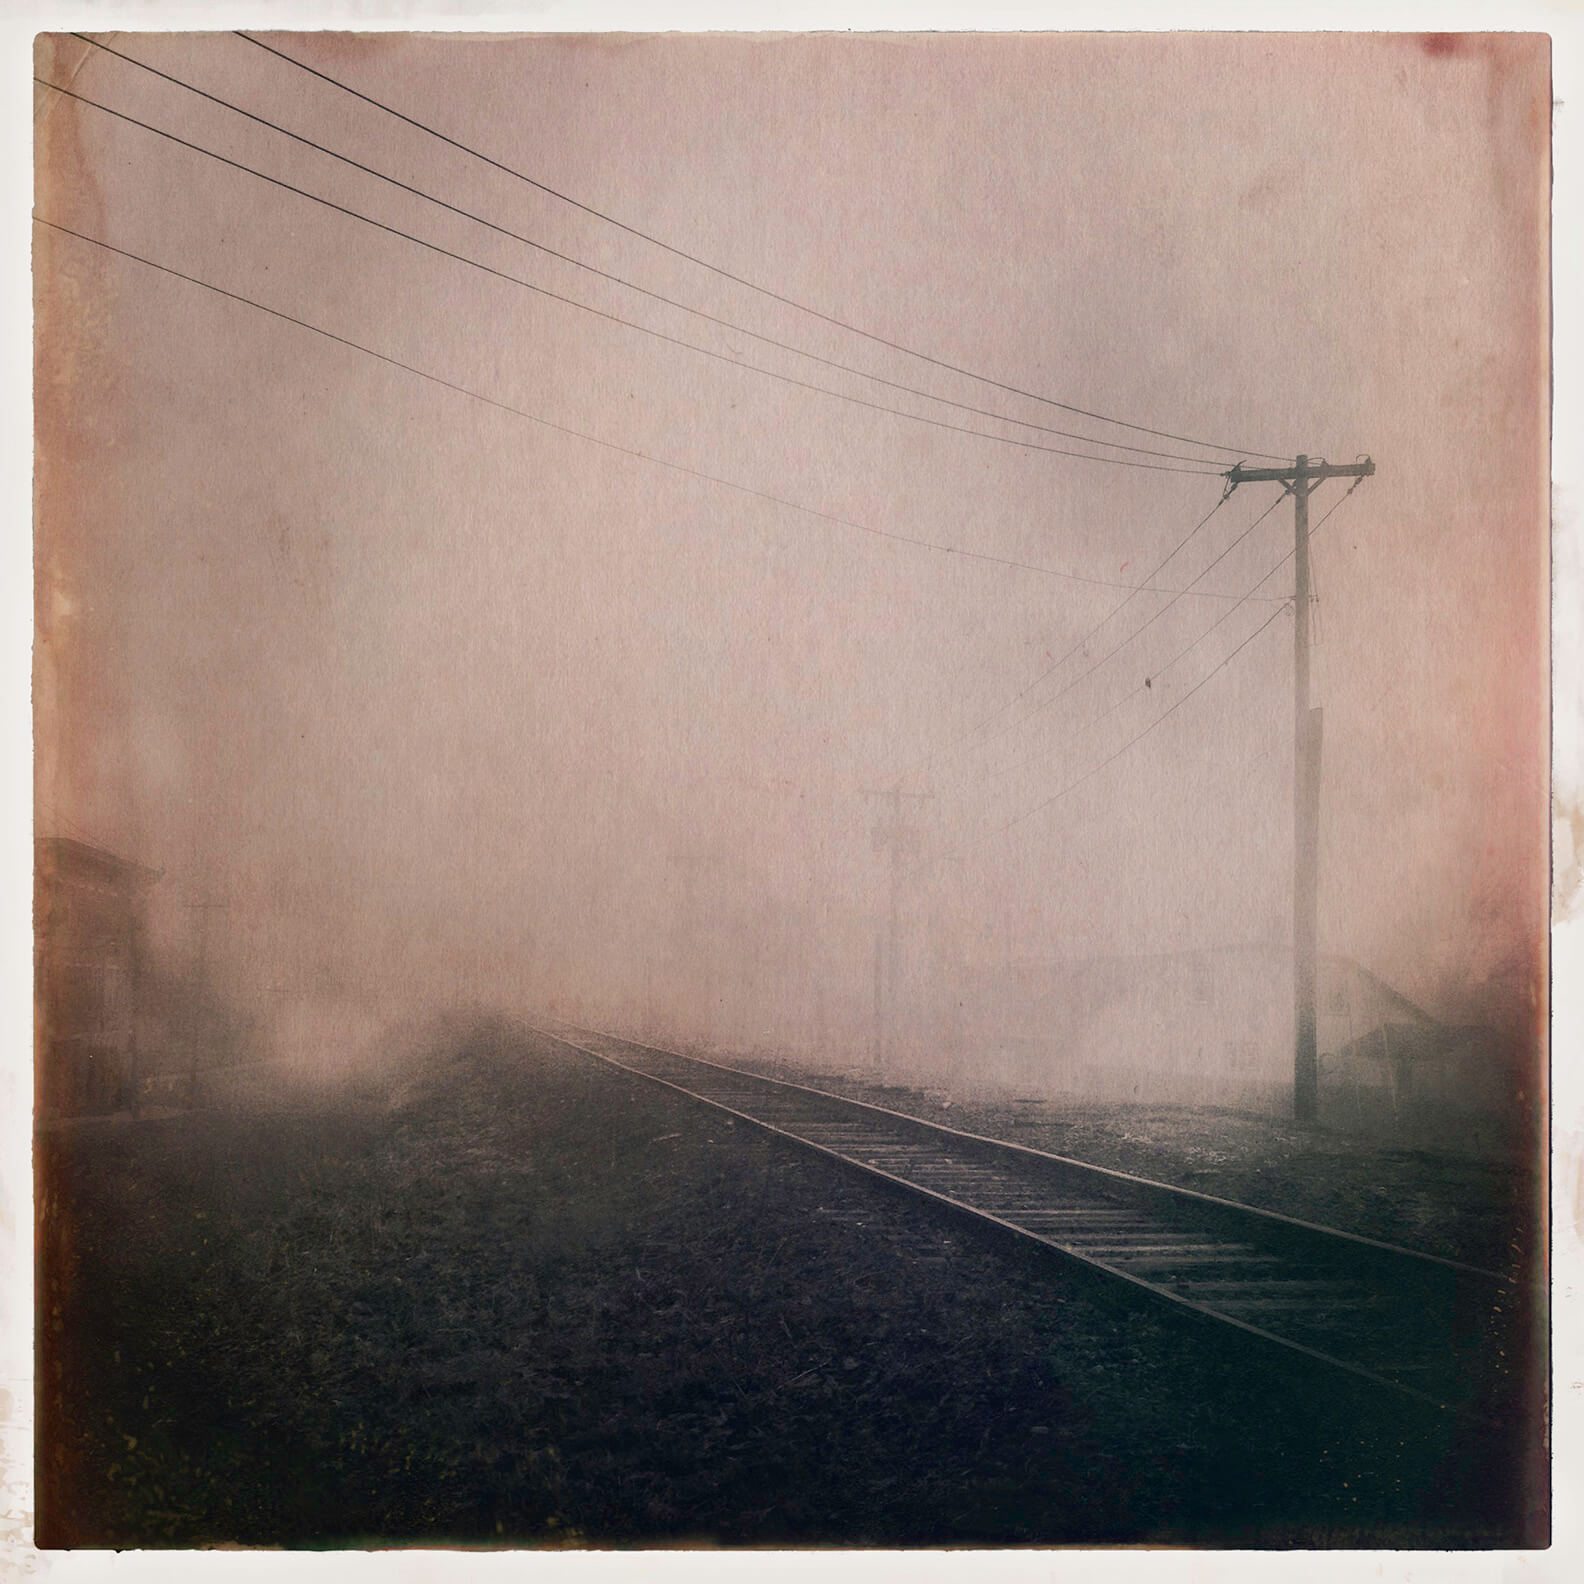 Fog over a train track